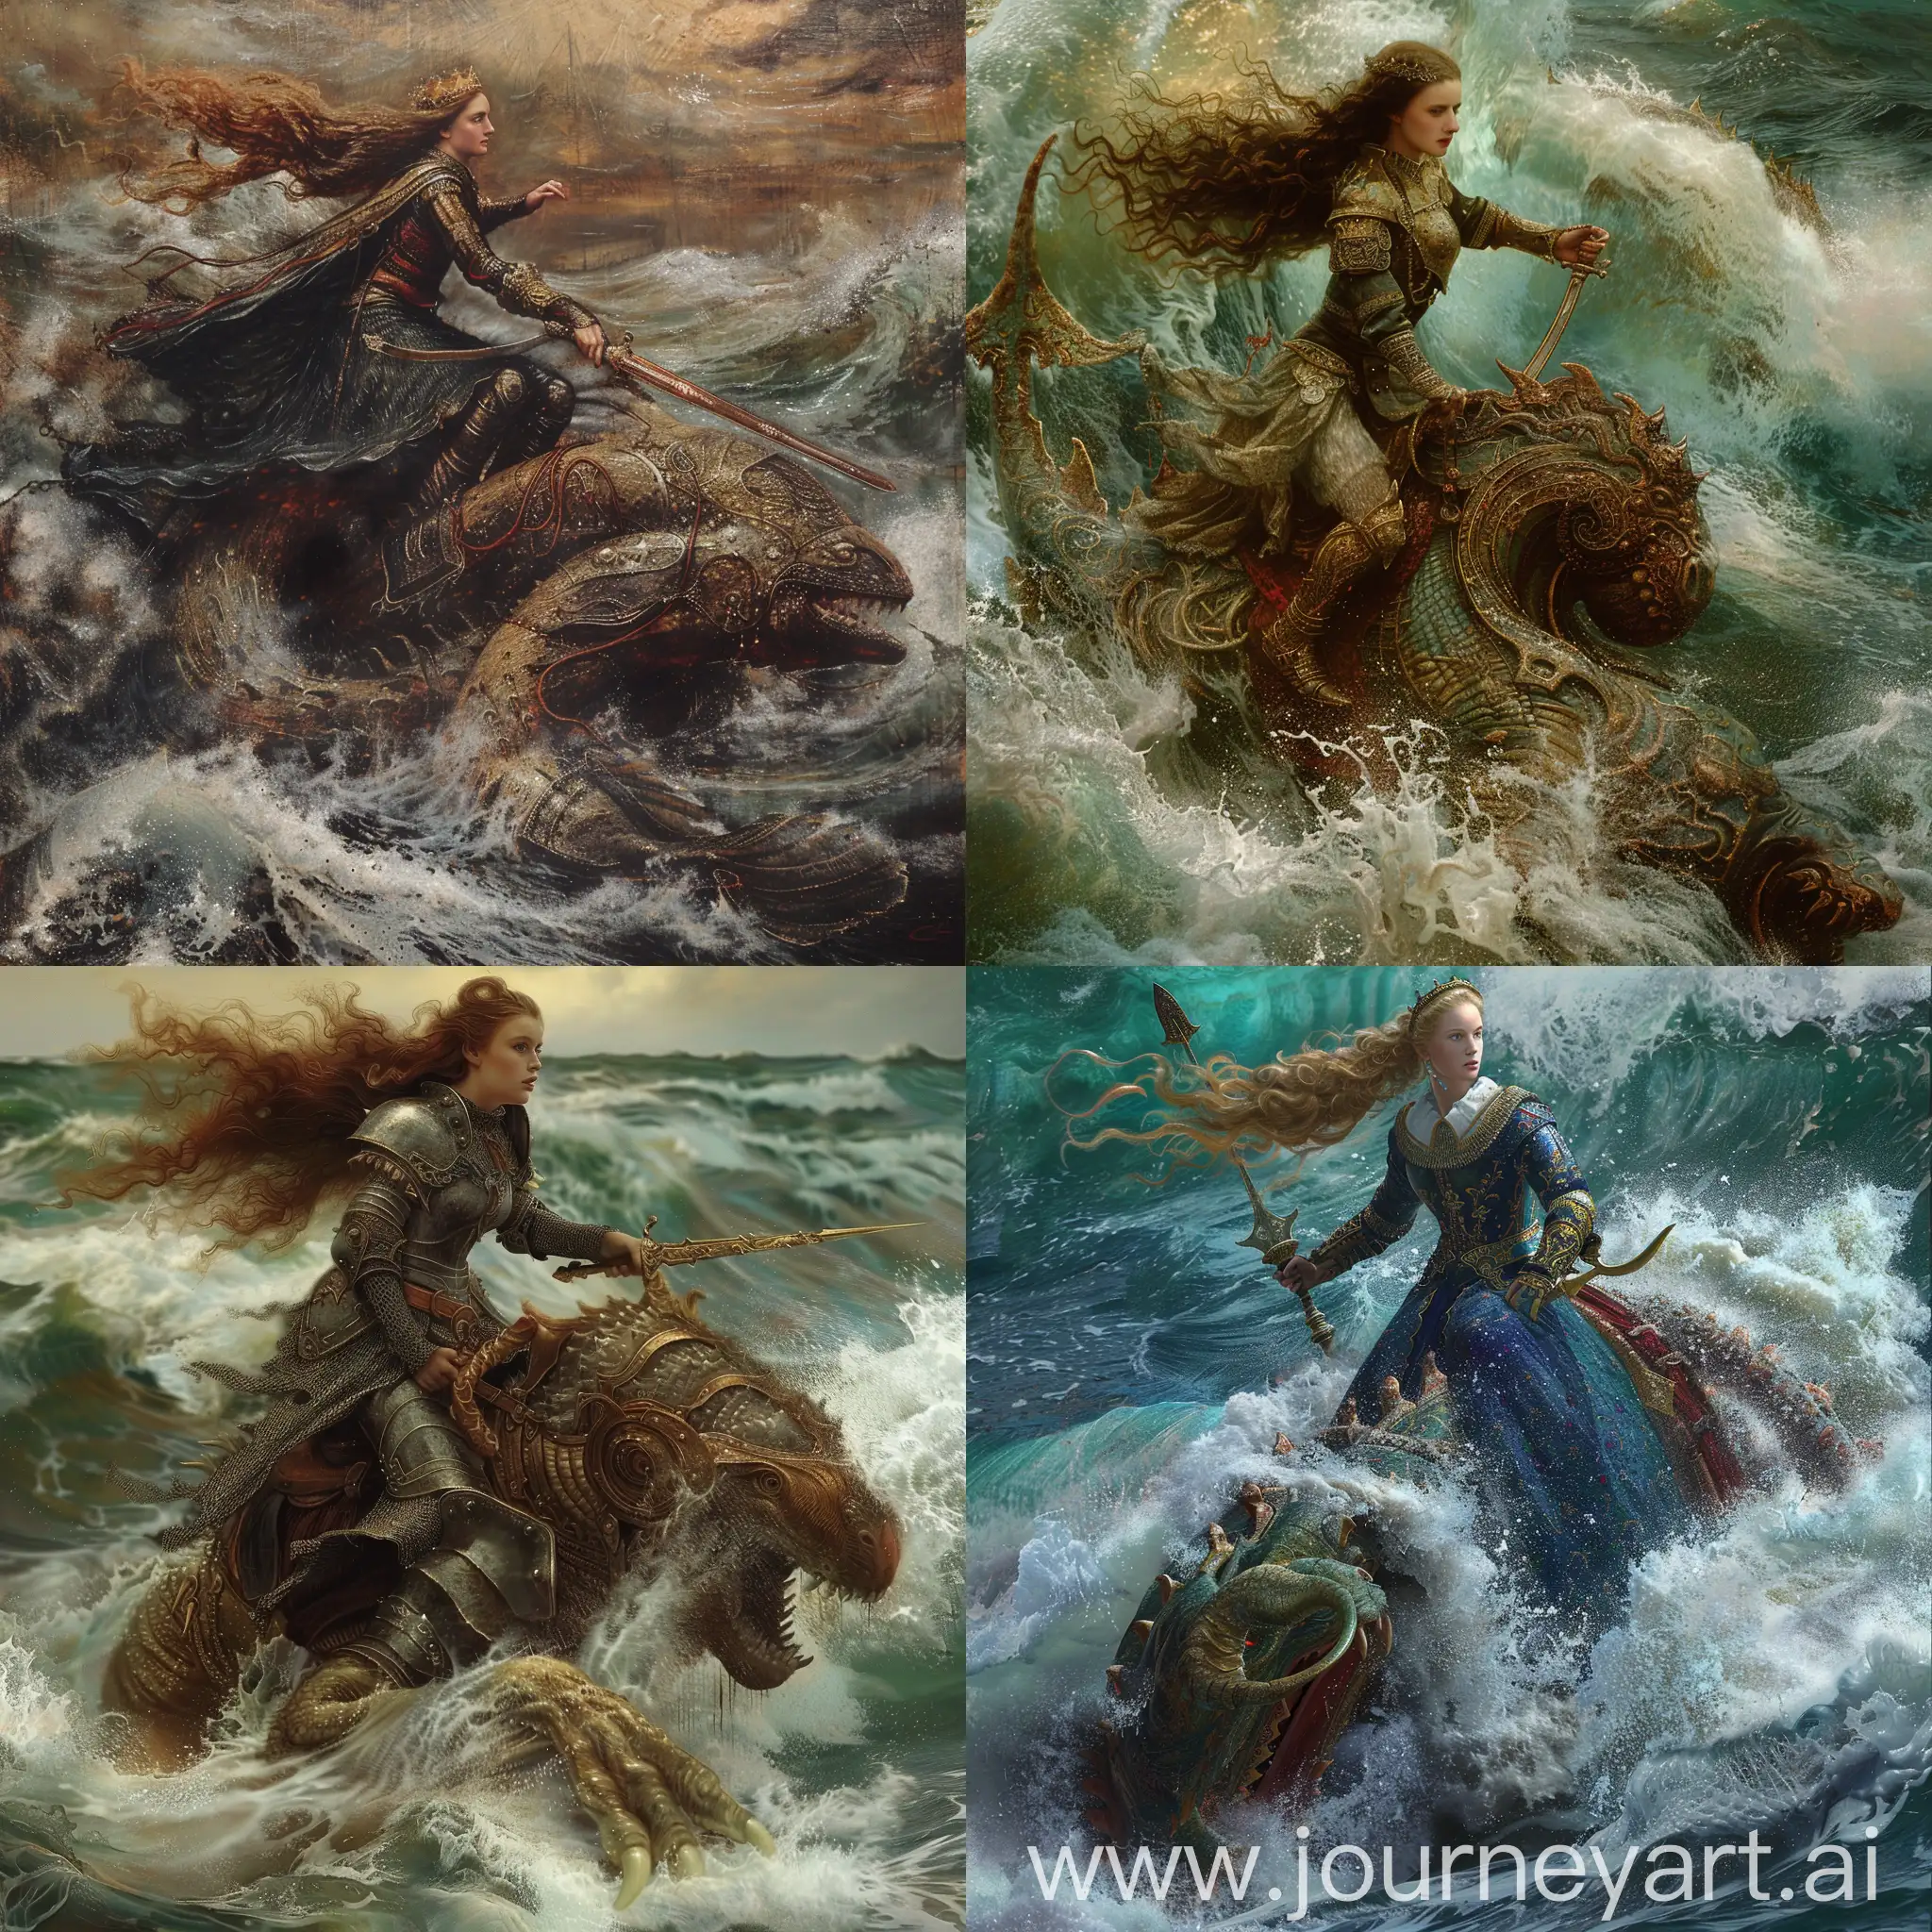 Medieval-Warrior-Maiden-Riding-Sea-Monster-in-Surreal-Fantasy-Scene